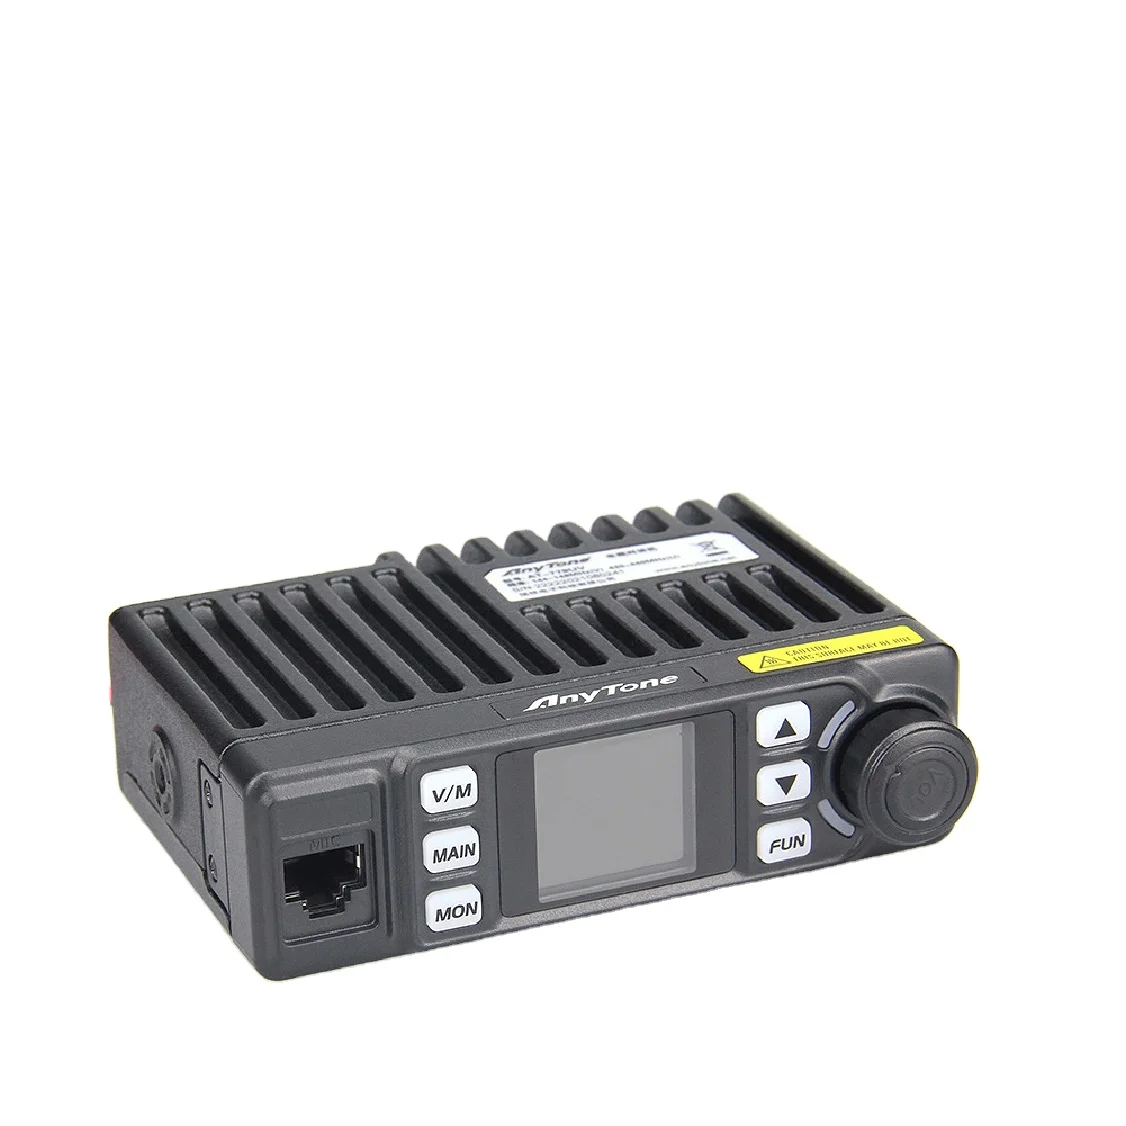 

AnyTone AT-779UV 20W Dual Band Transceiver Amateur Radio VHF/UHF Mobile Radio Long Range Mini Scanning Receiver Free Cable